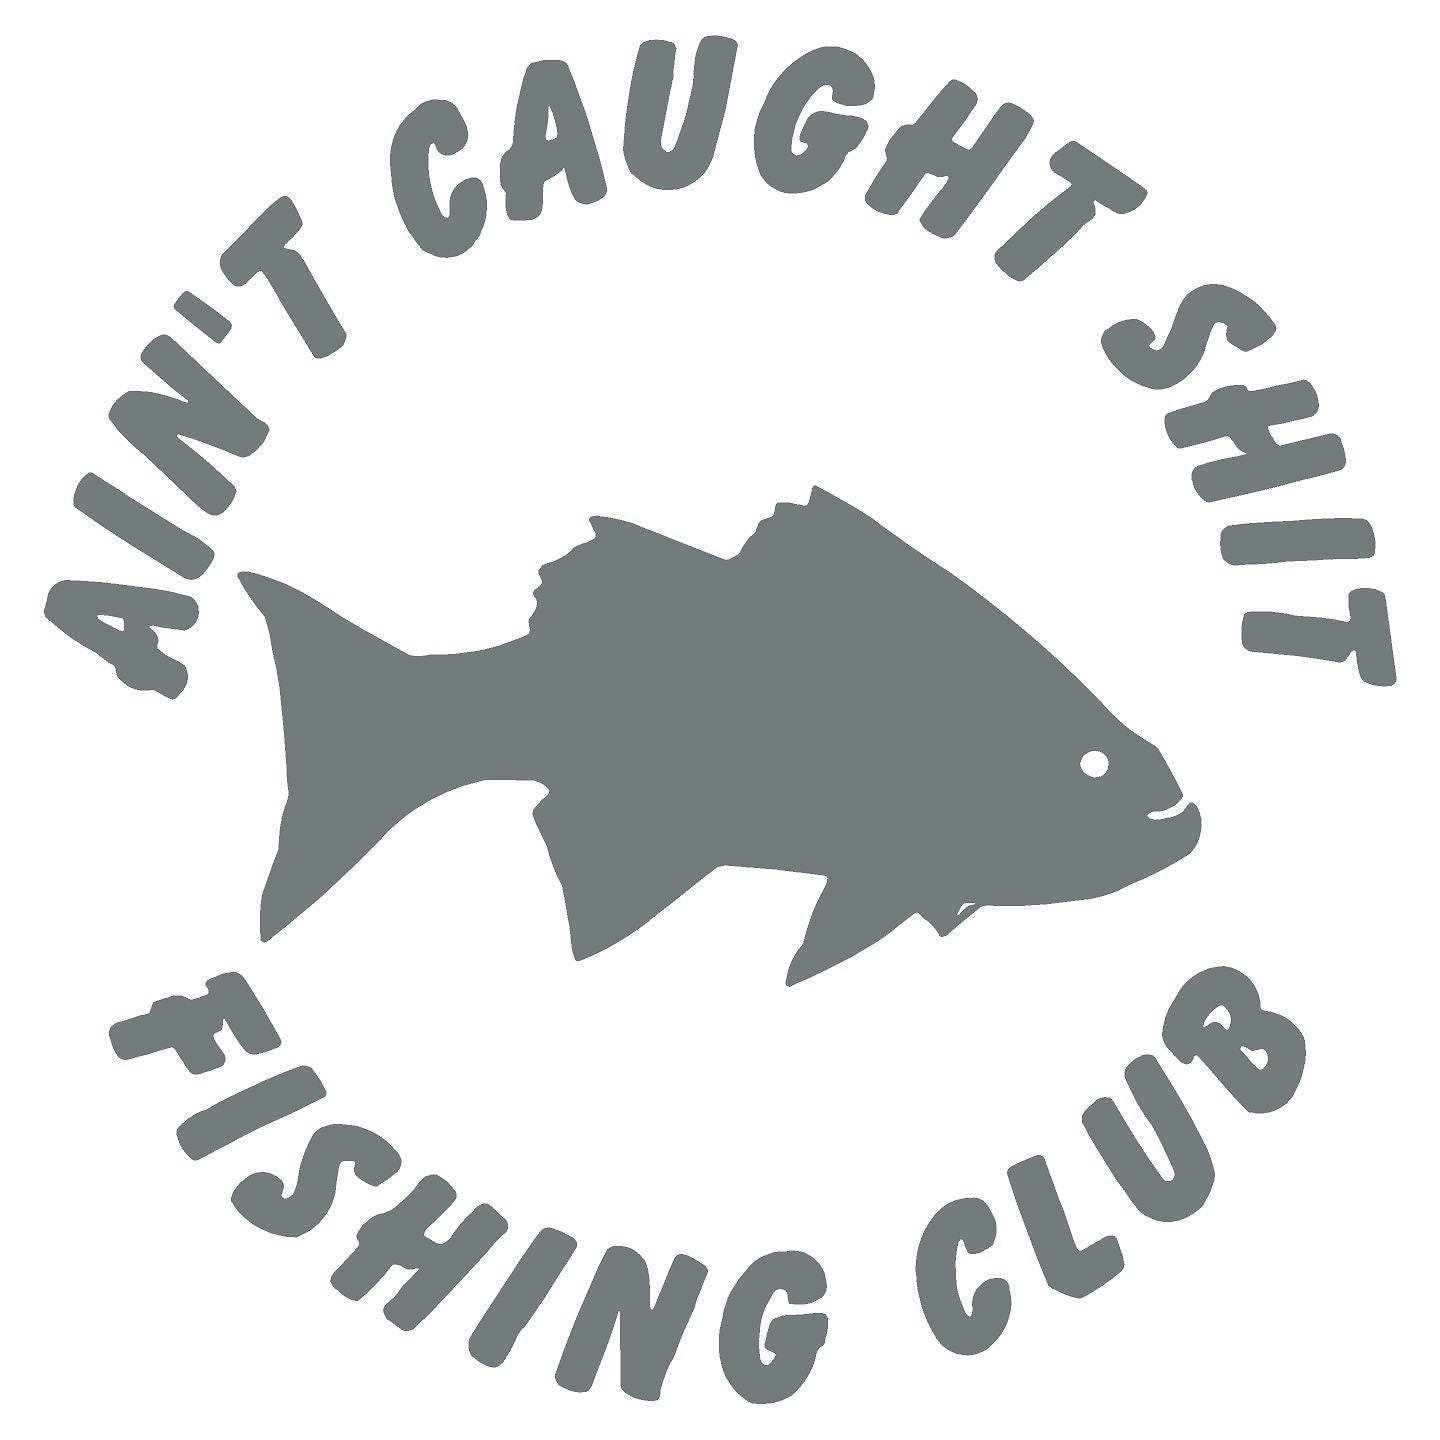 Ain't Caught Shit Fishing Club/ Funny Fishing Vinyl Decal Car Window,  Mirror, Bumper, Yeti, Laptop, Cornhole Sticker -  Israel